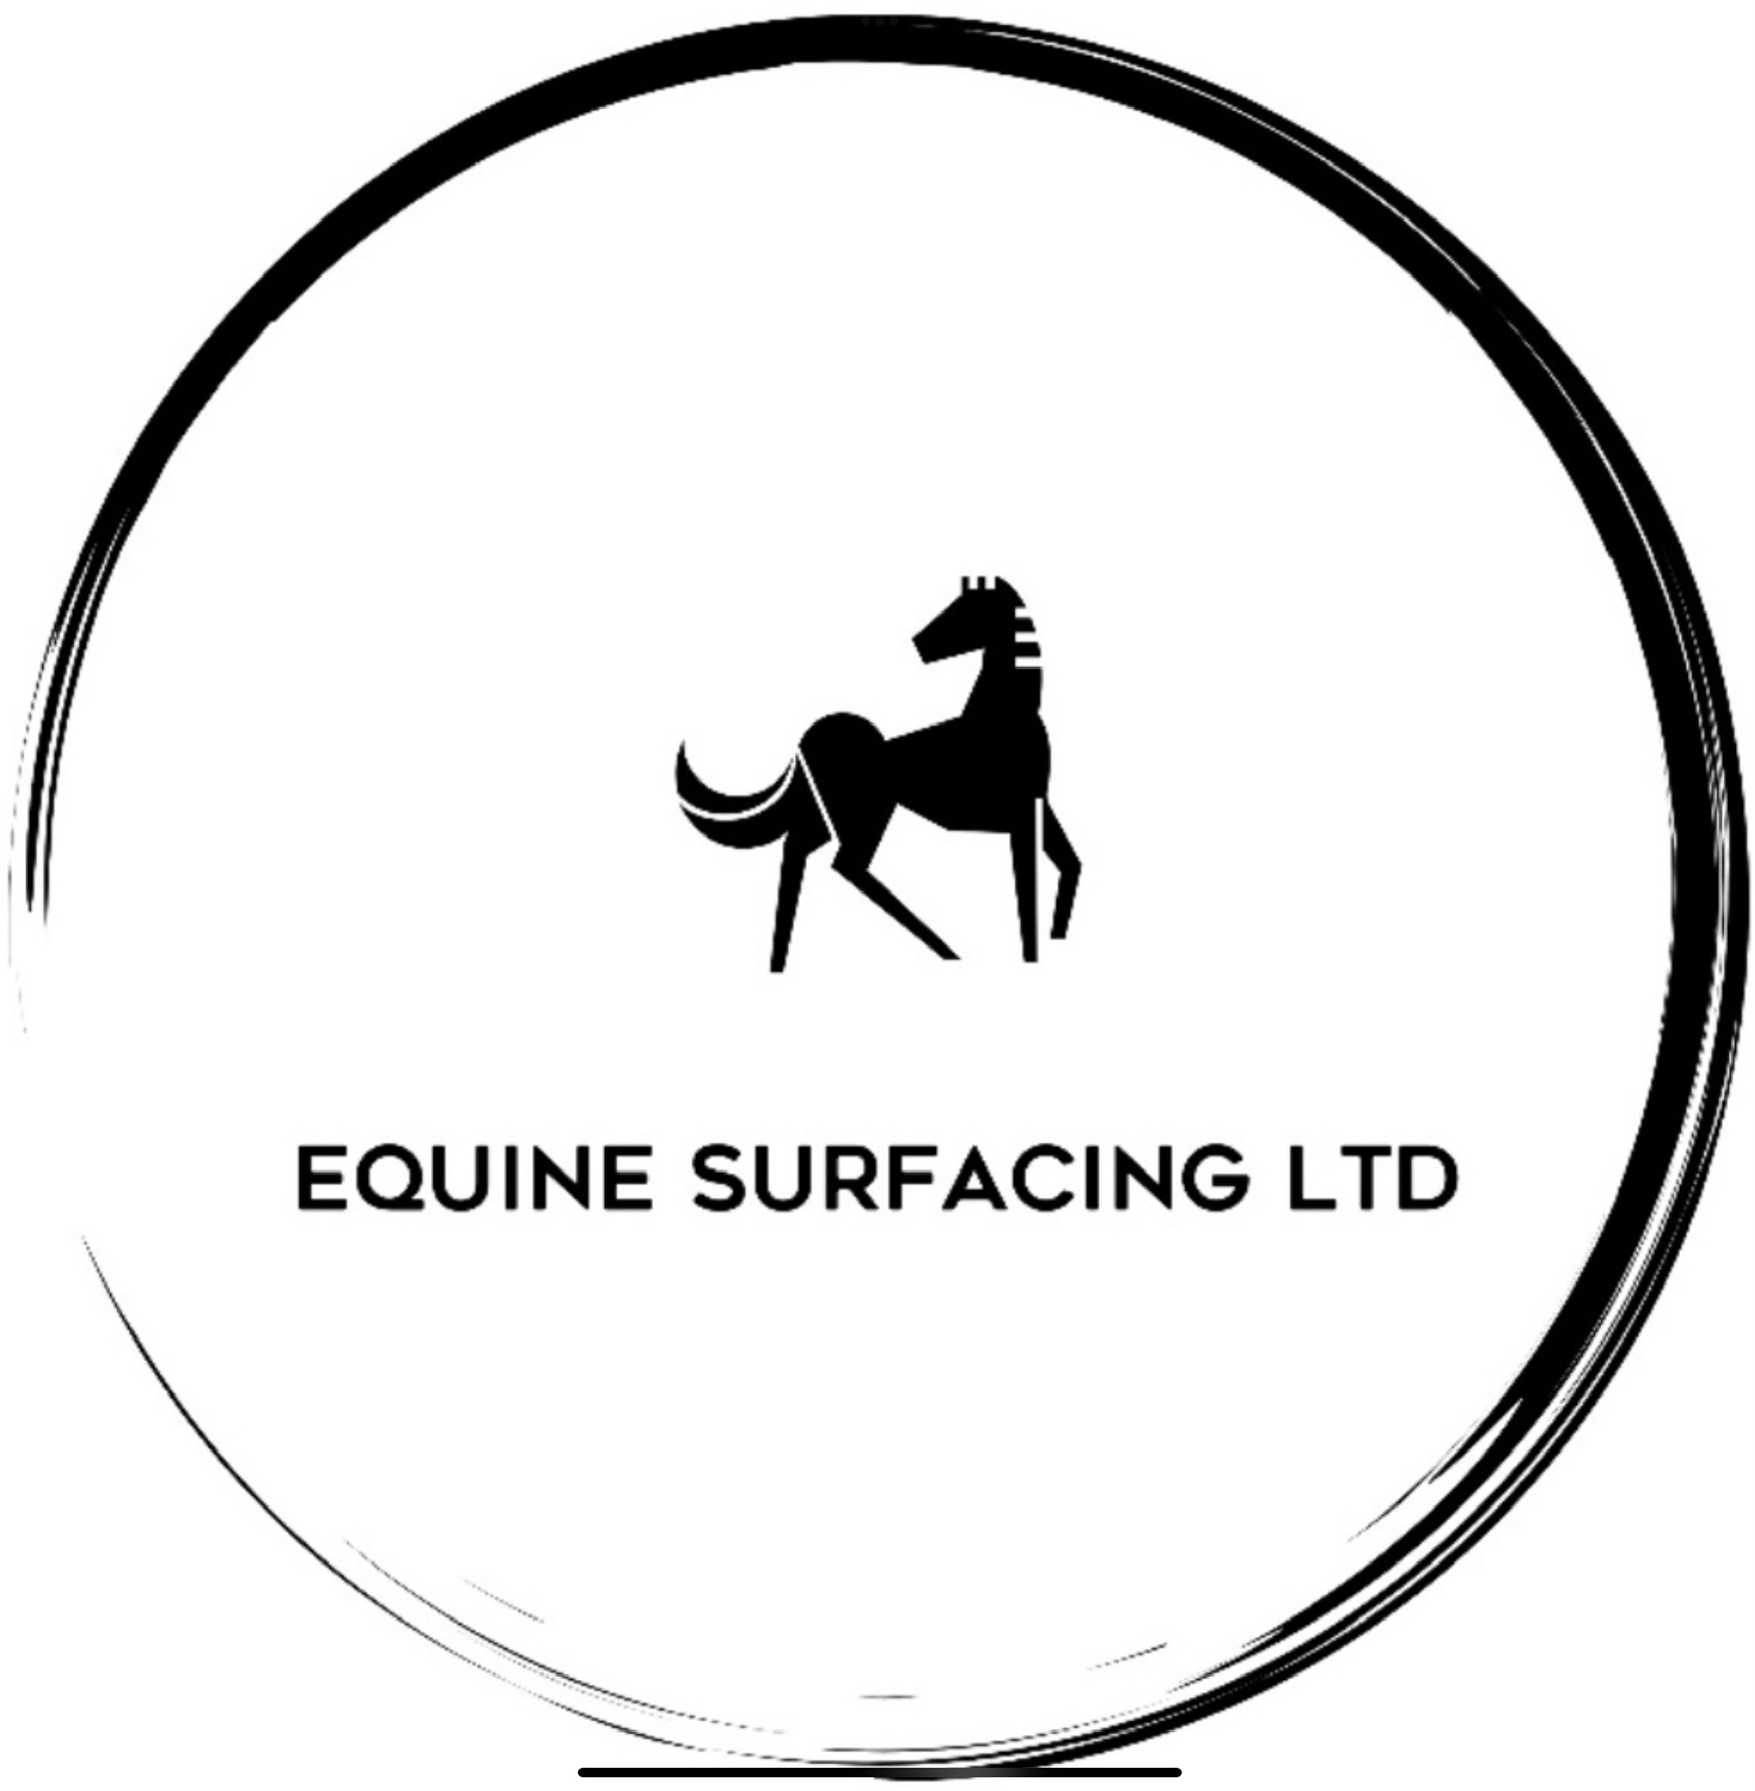 Equine surfacing ltd